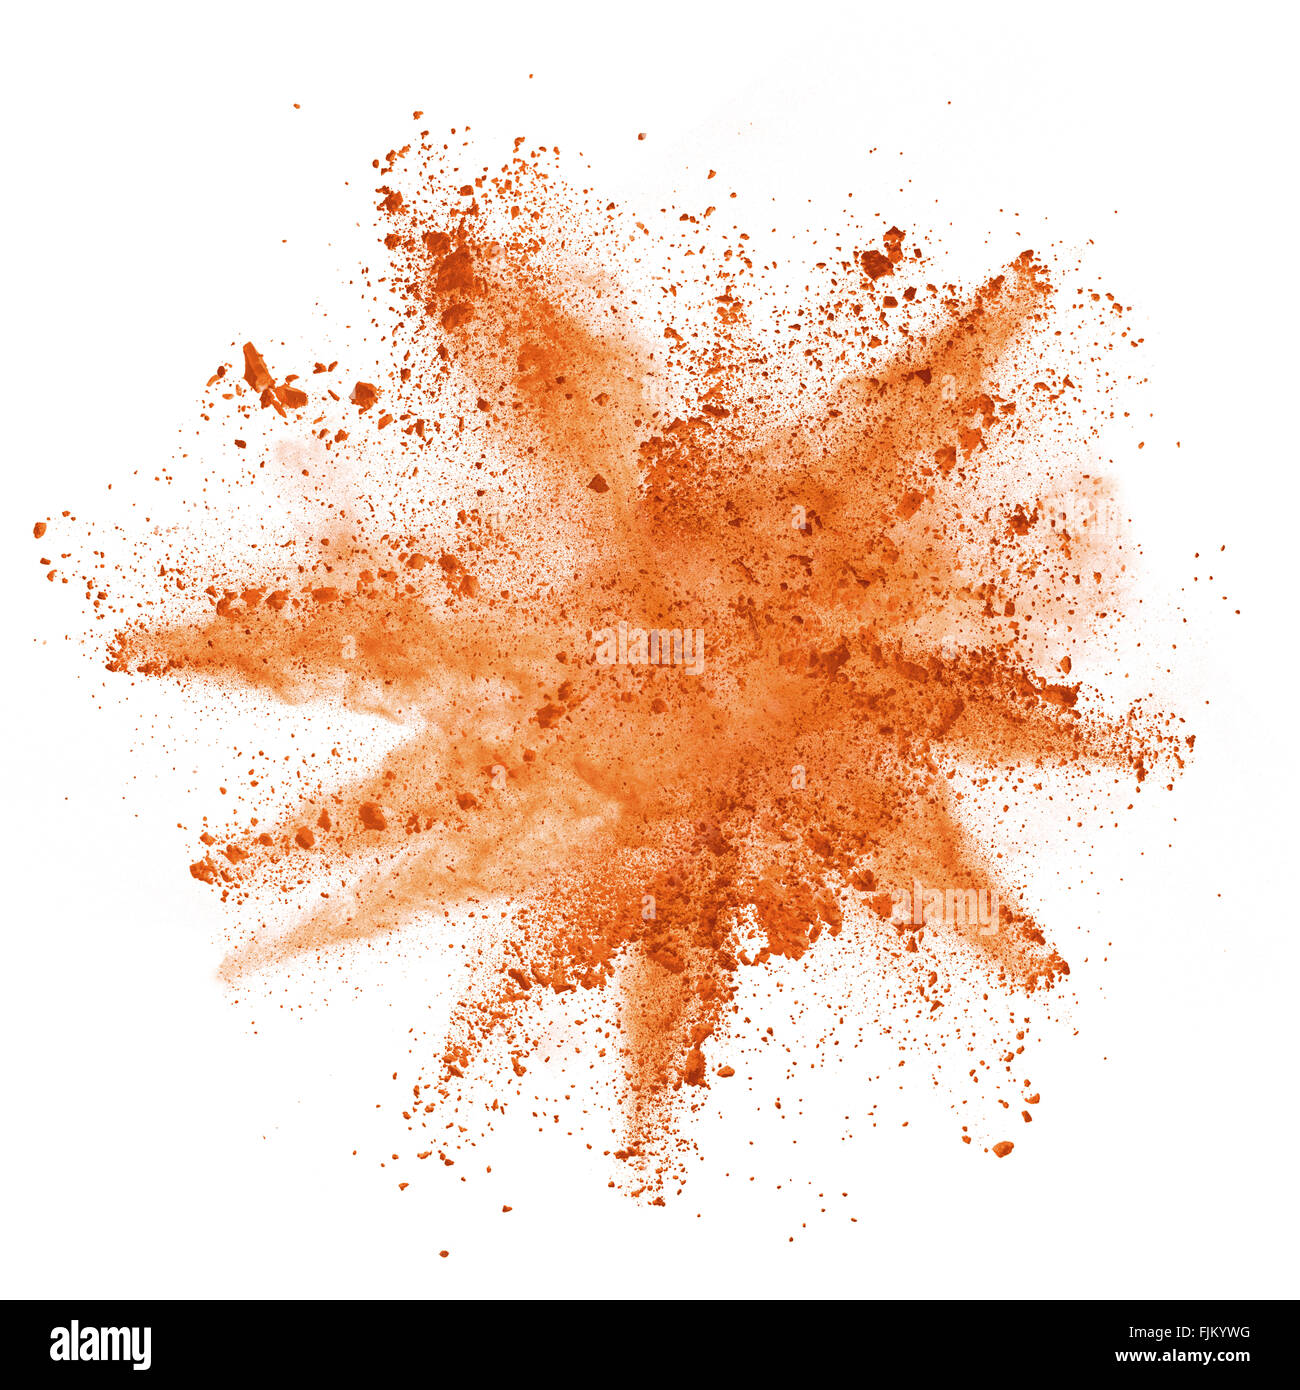 Explosion of orange powder on white background Stock Photo